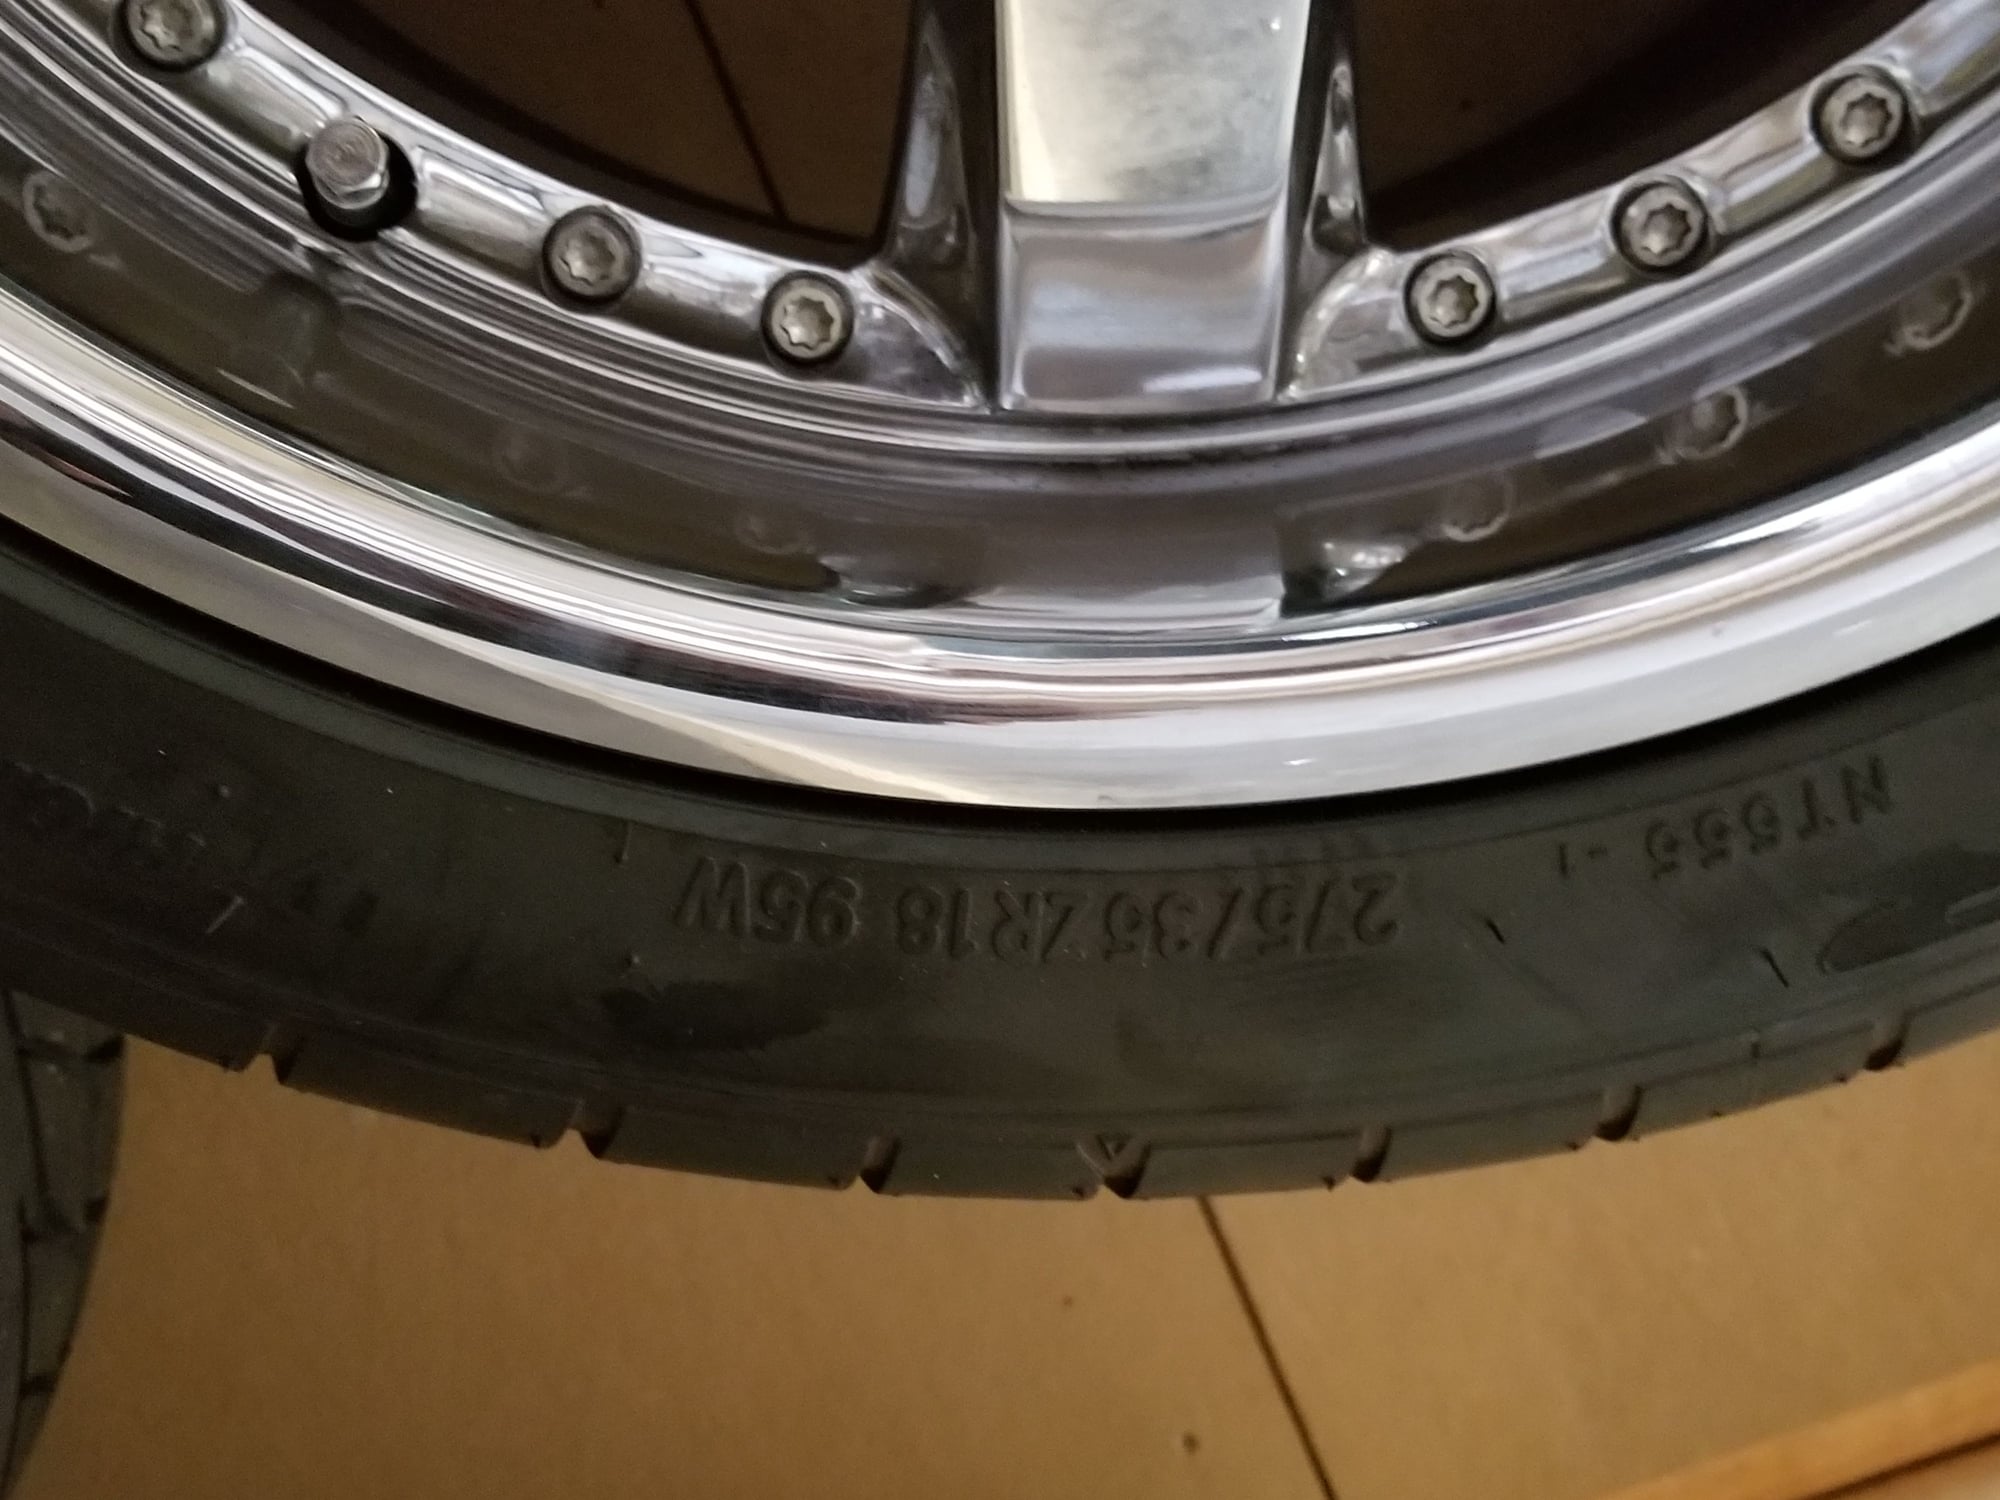  - TSW Jarama wheels and tires - Durham, NC 27712, United States